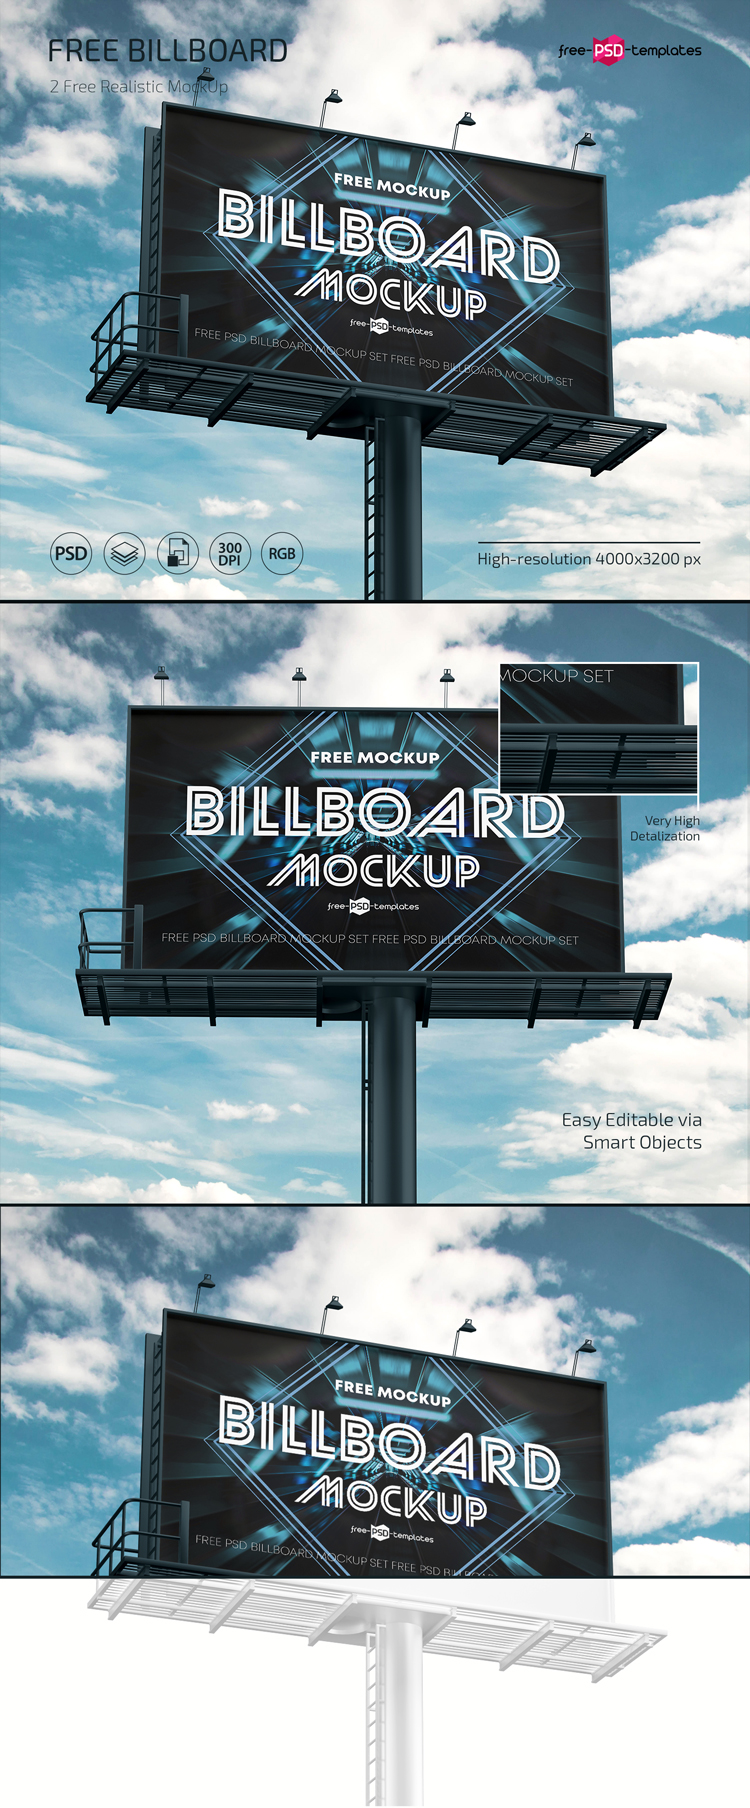 Free Billboard Ad Mockups in PSD | Free PSD Templates